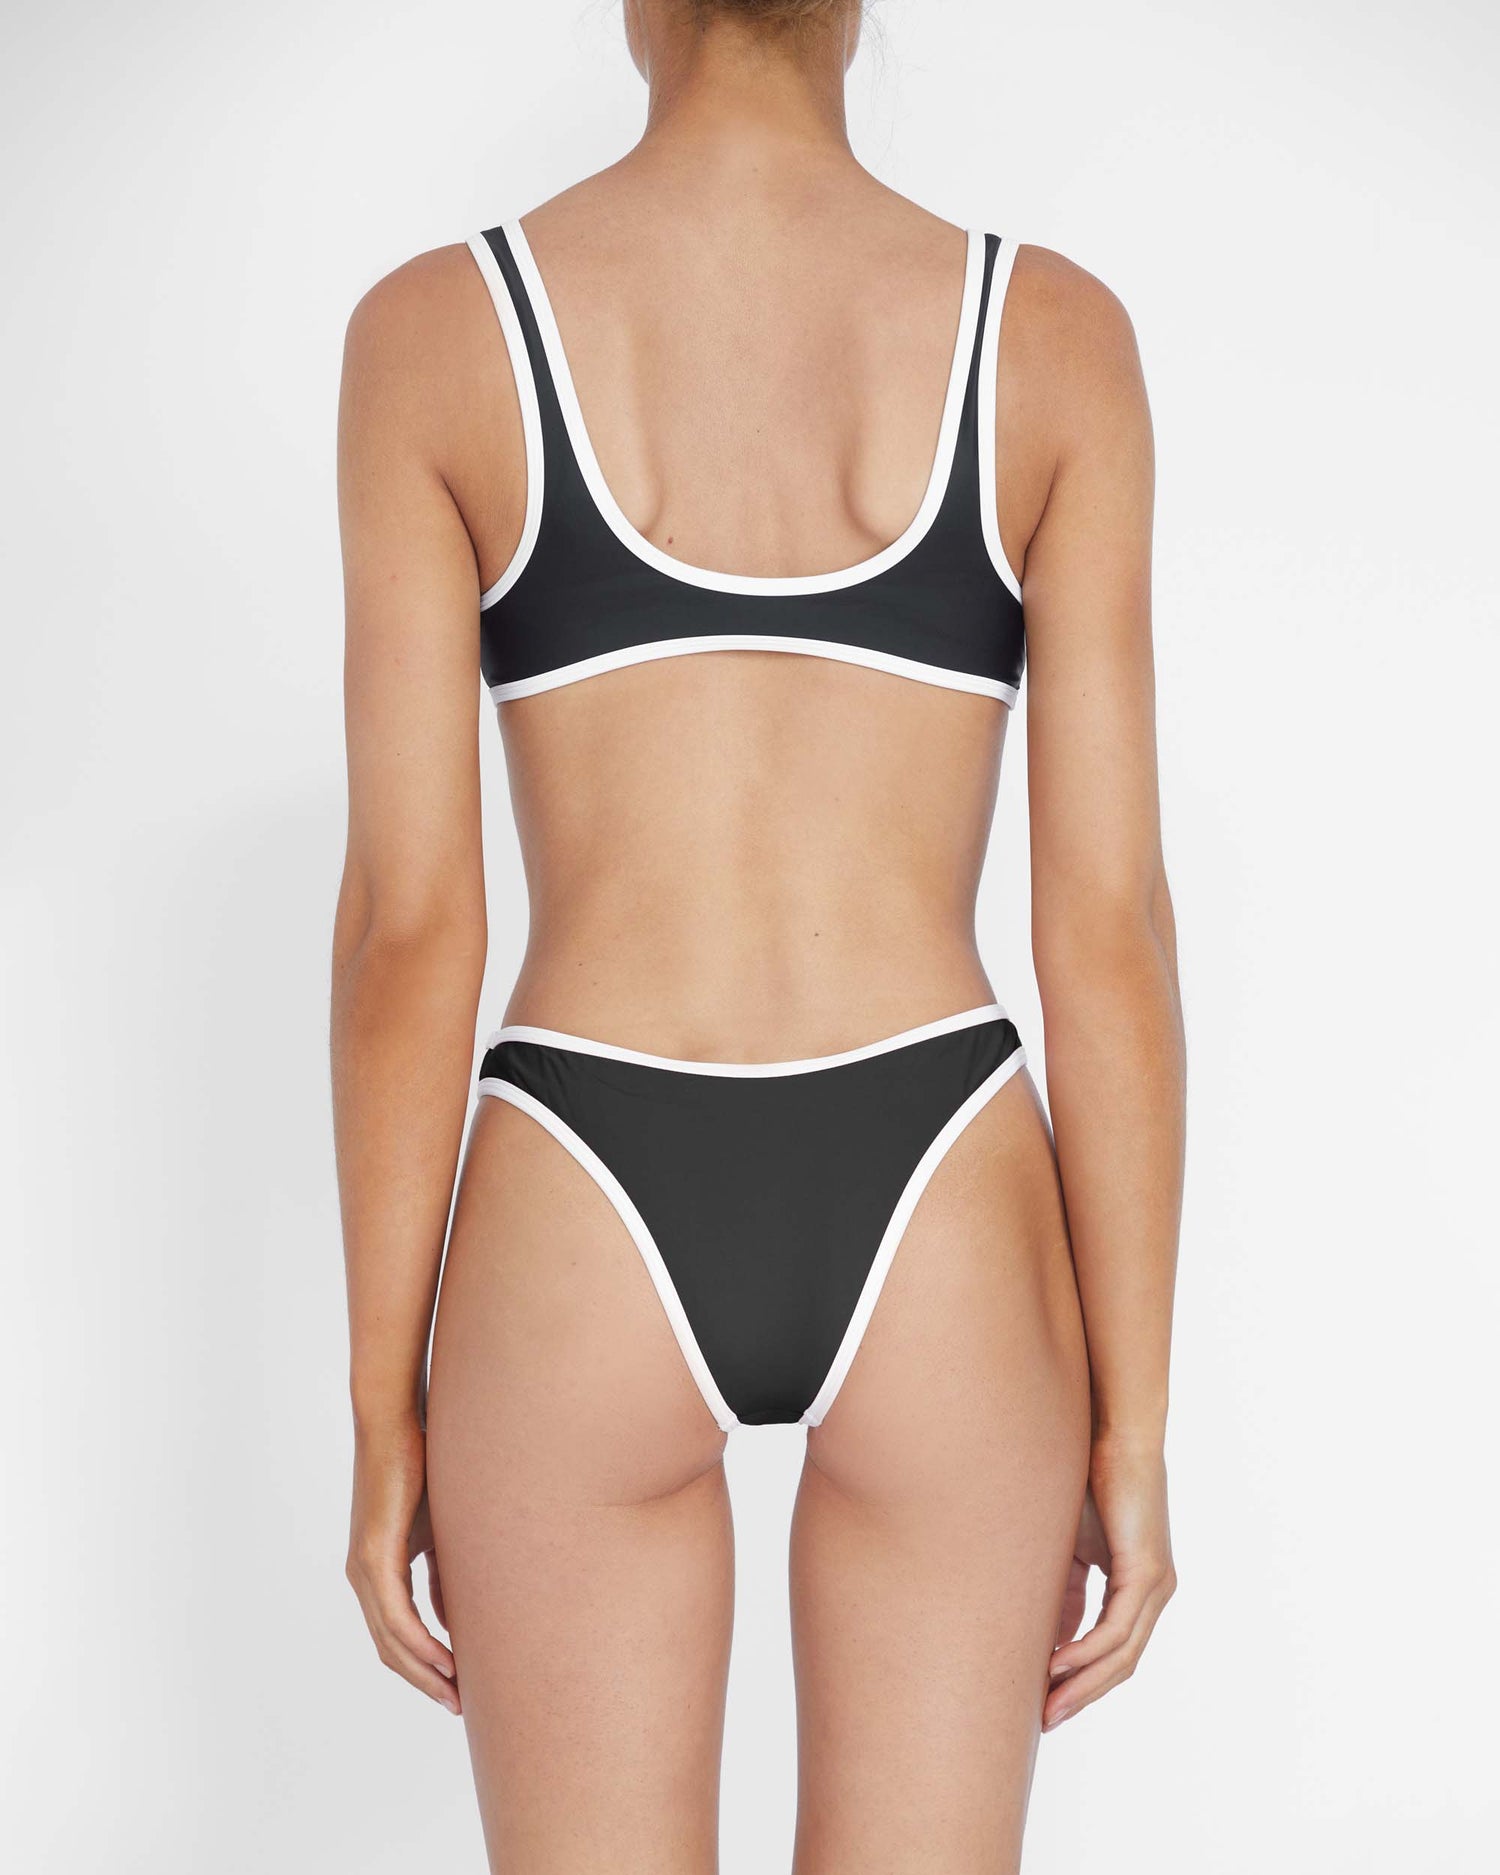 It's Now Cool Swimwear - 90s Duo Crop - Black & White Contrast